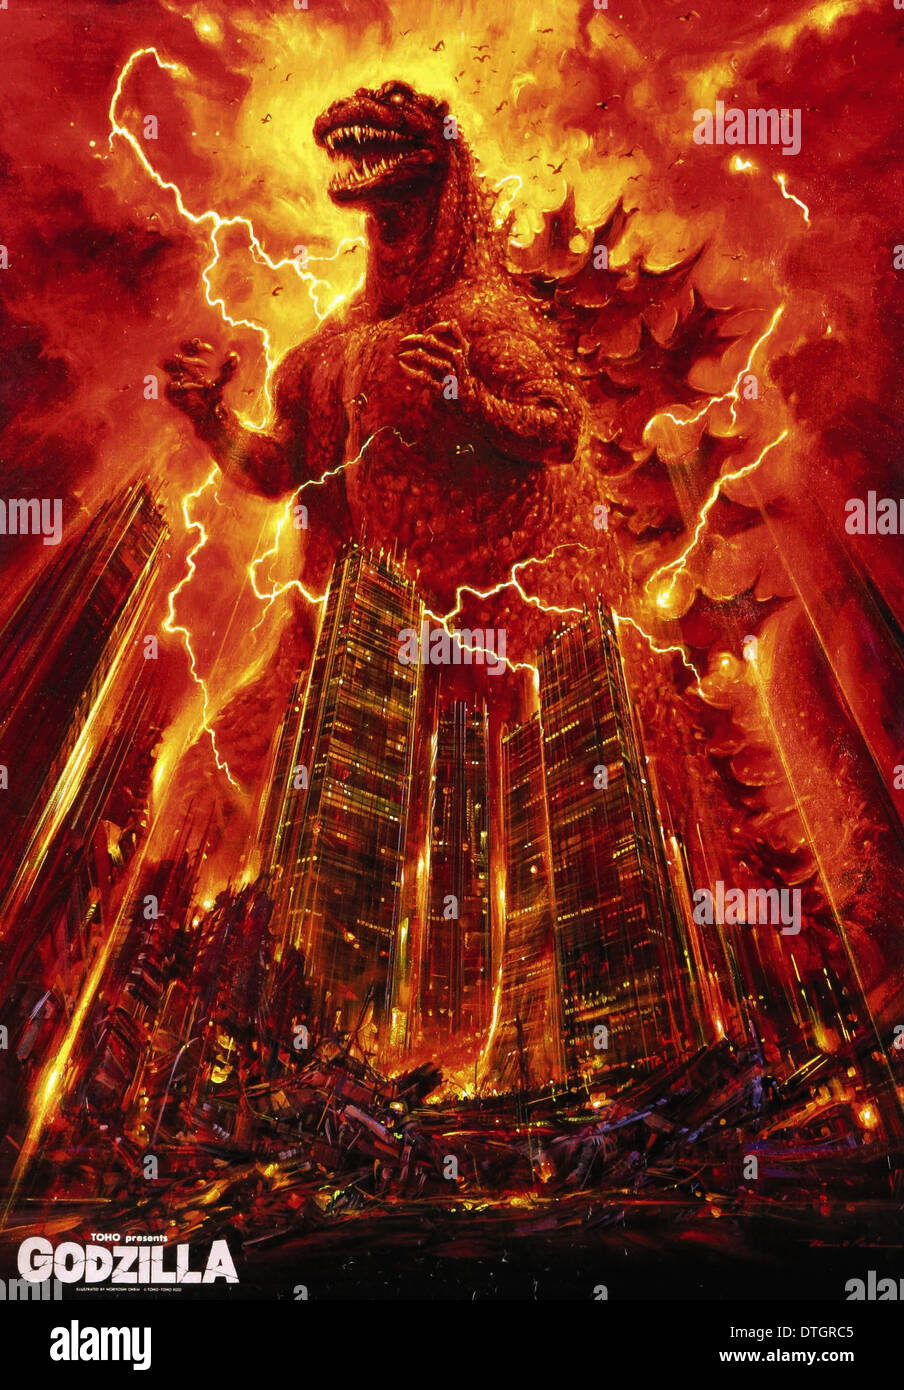 Godzilla movie poster Stock Photo